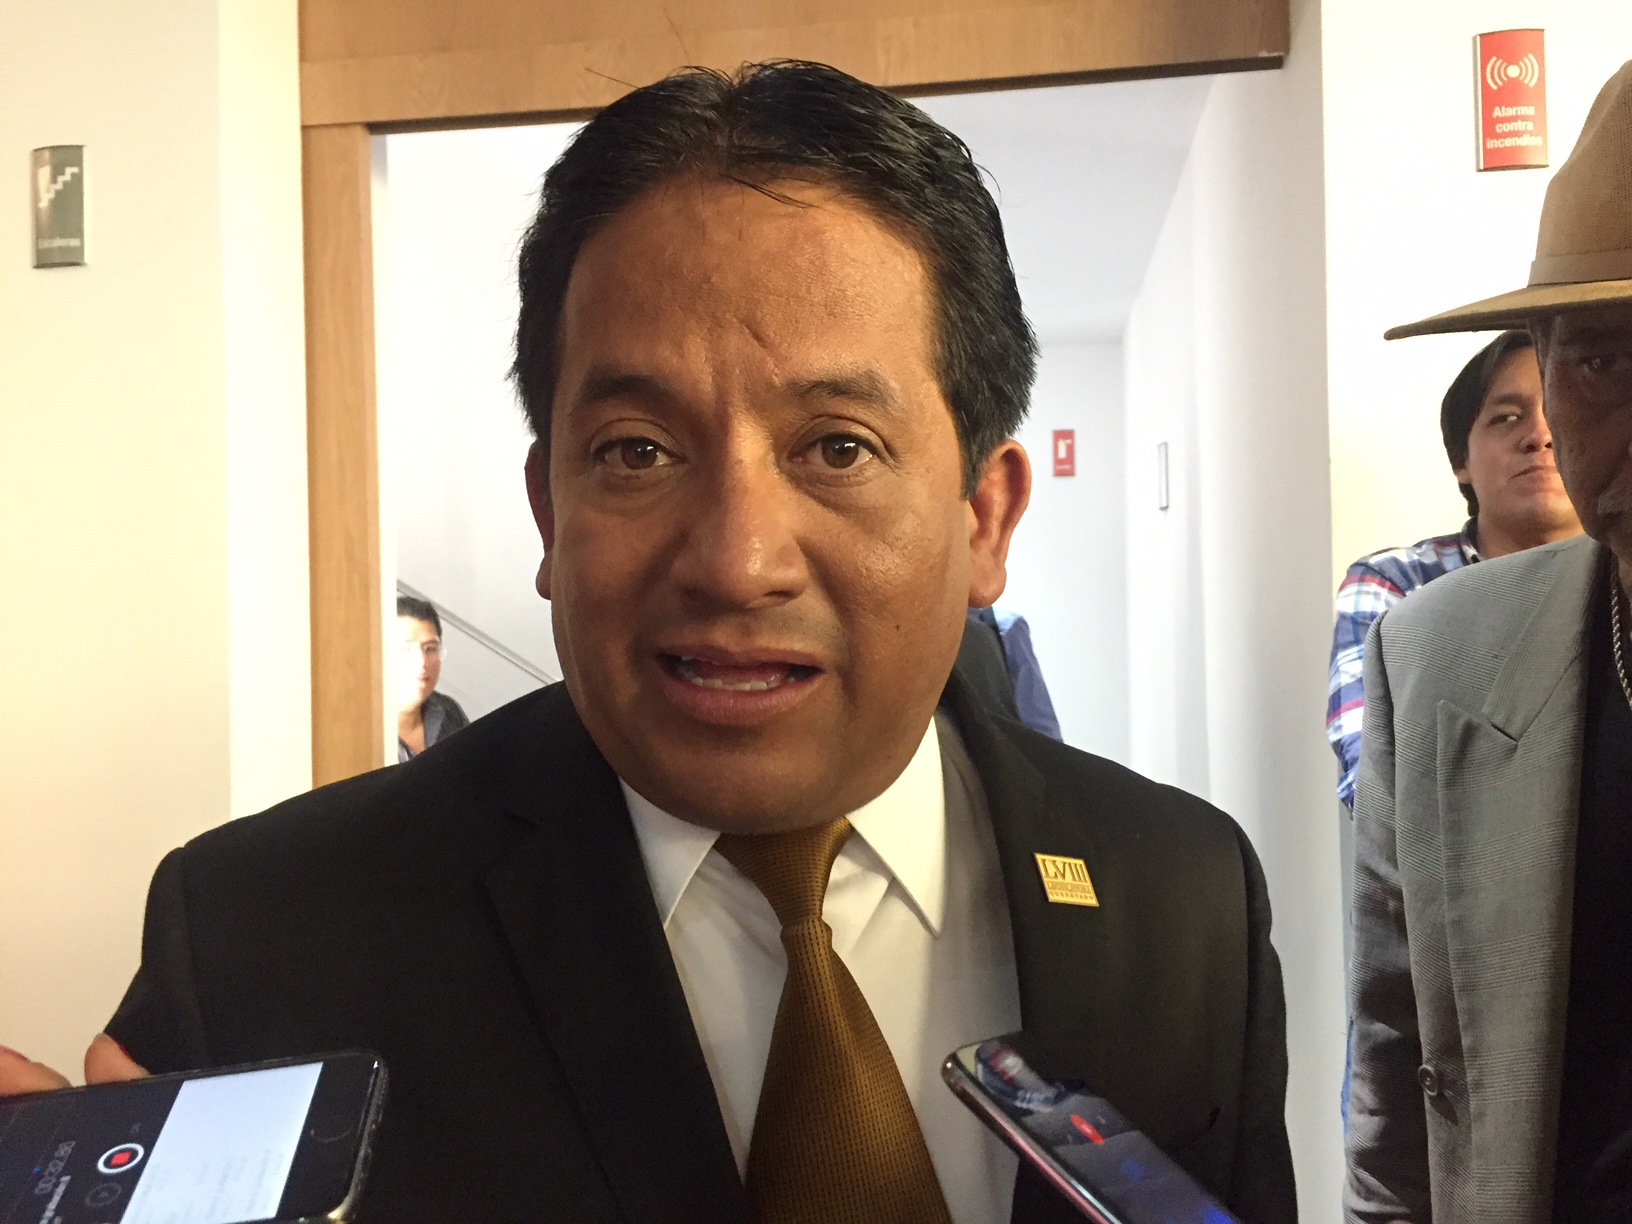  Diputado Eric Salas confirma que le interesa participar en proceso electoral 2017-2018